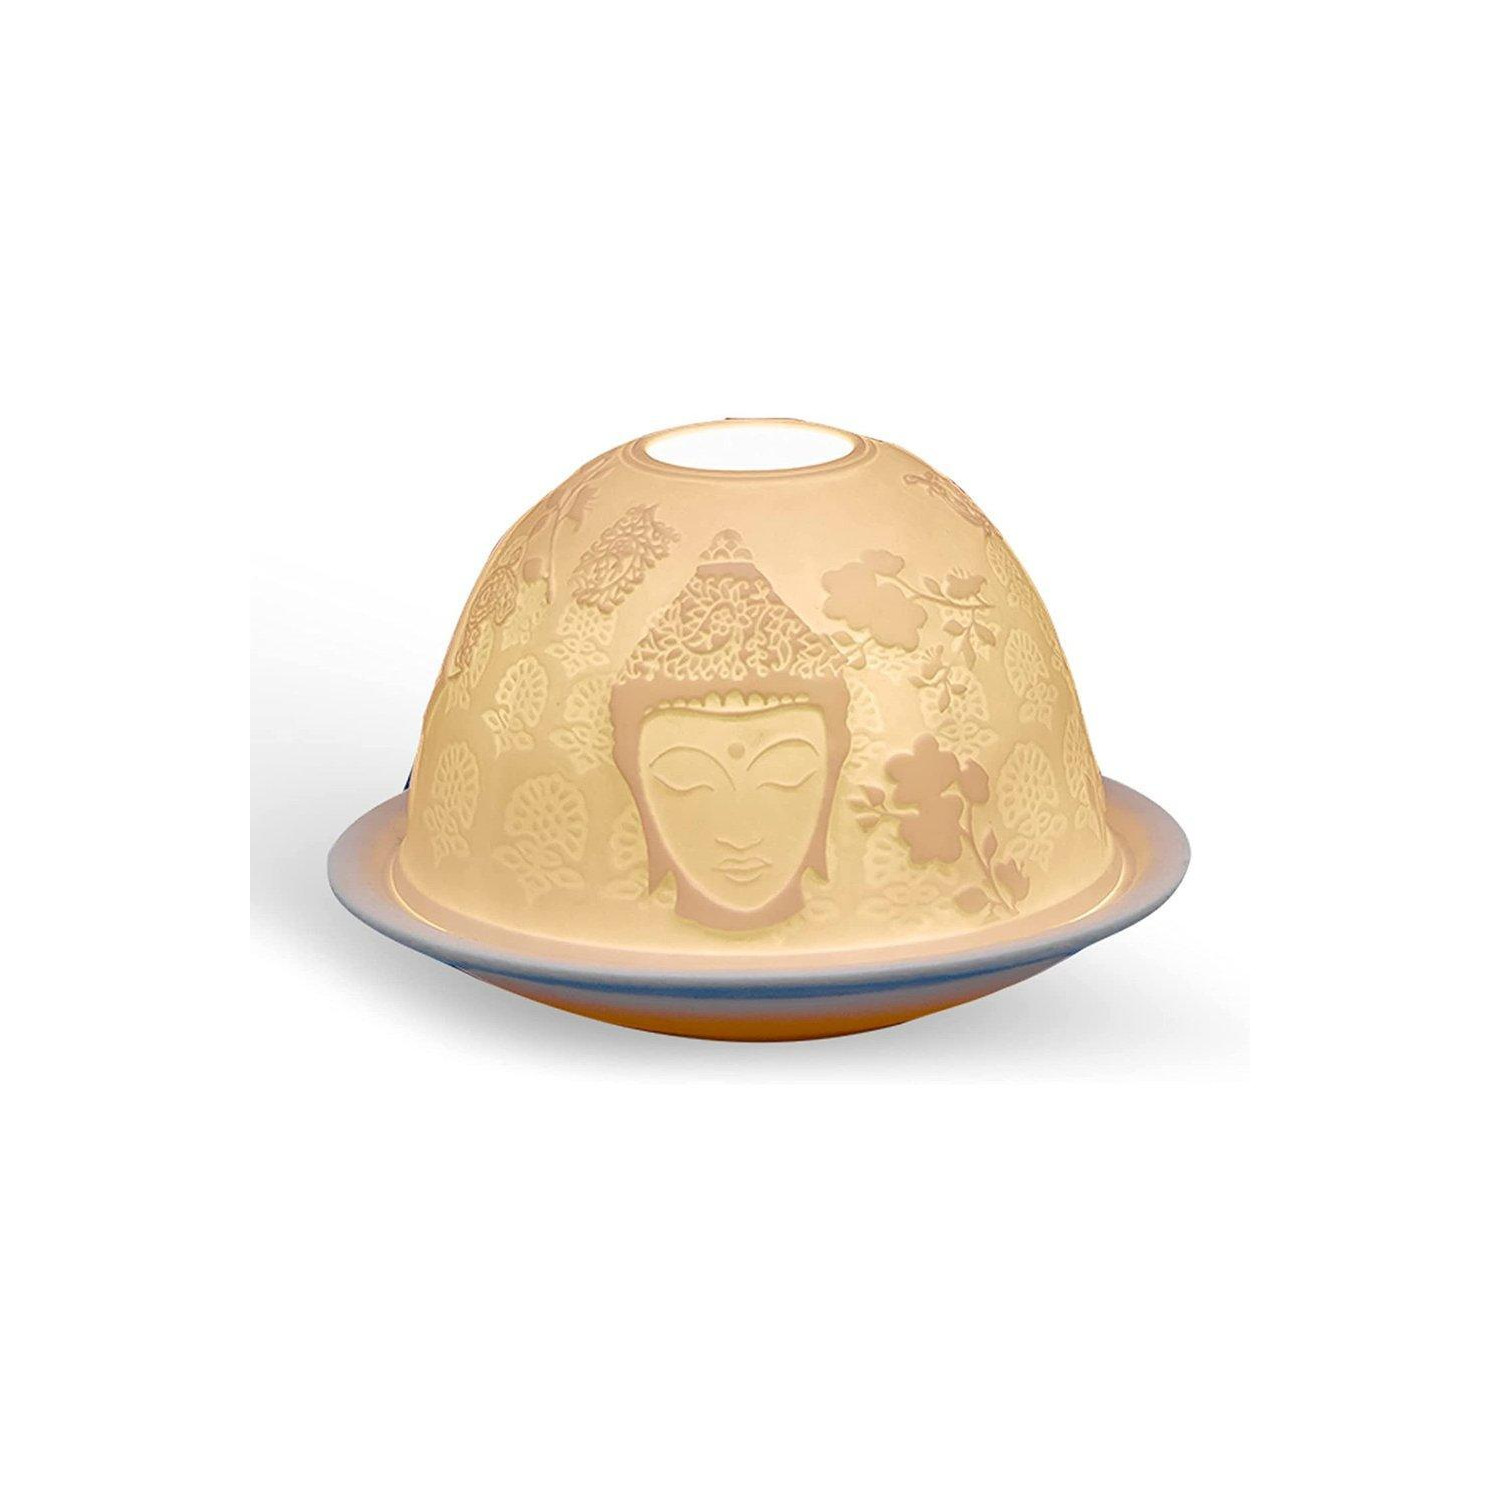 Dome Tealight Holder Zen Aura - image 1